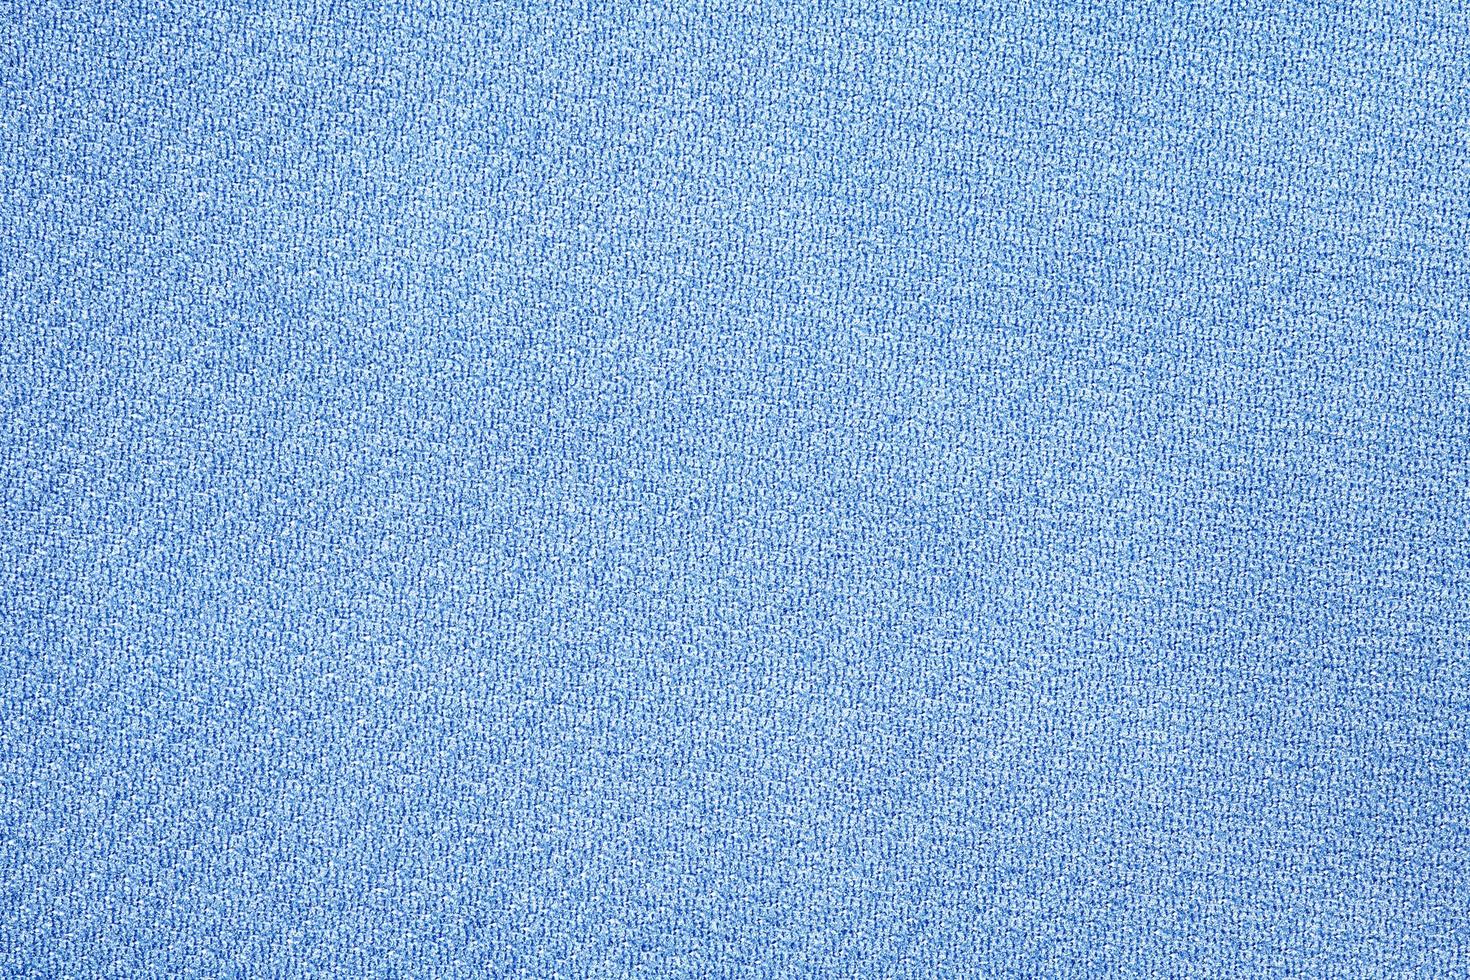 Close-up blue fabric background photo